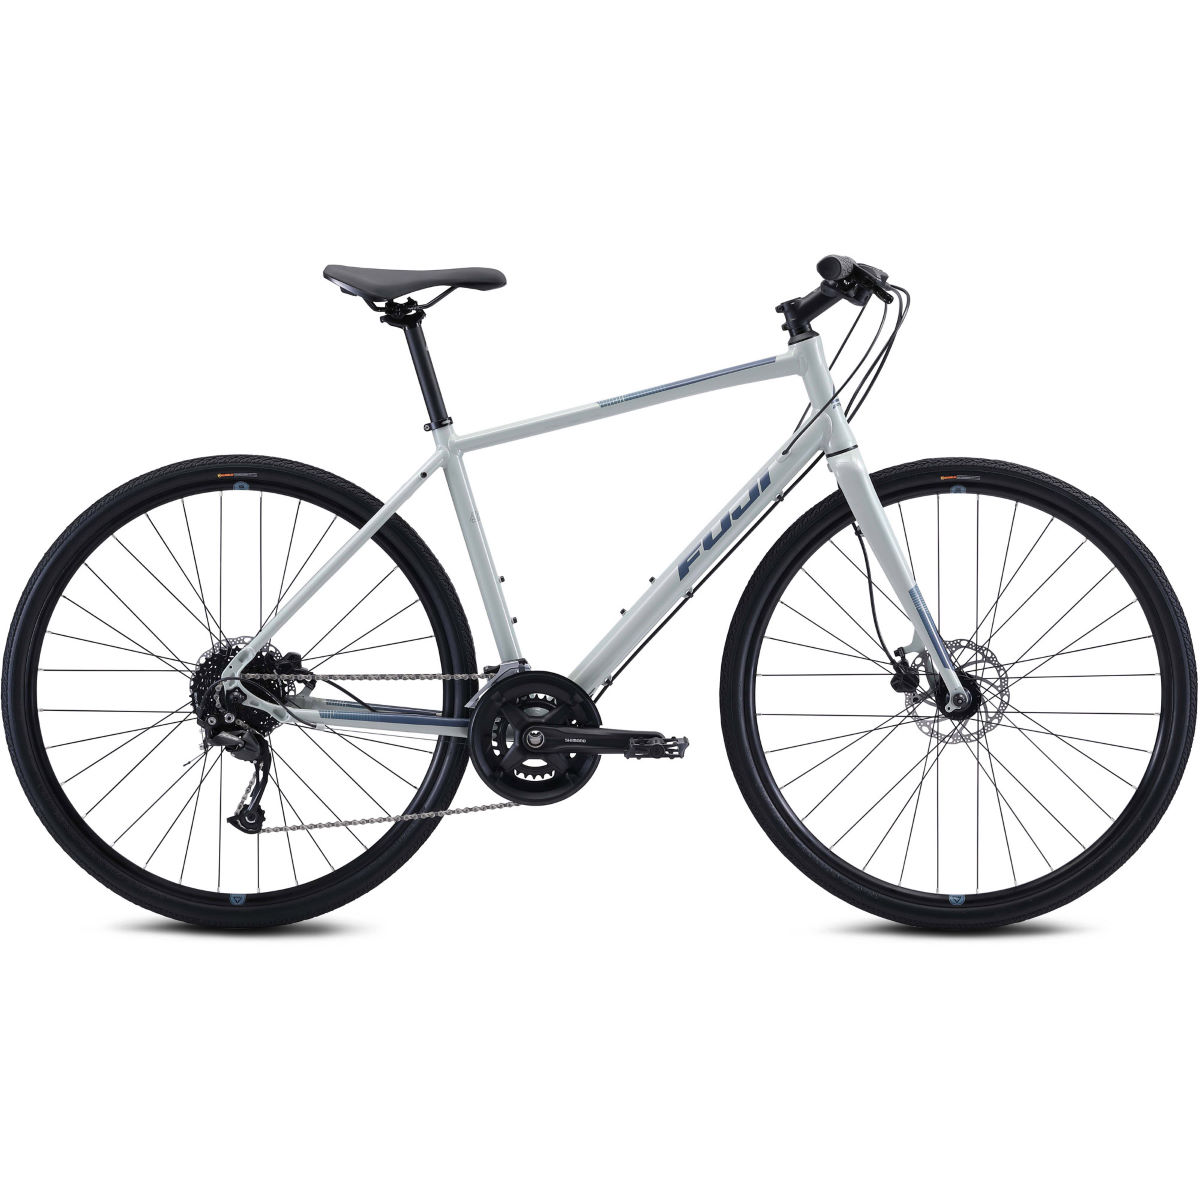 Bicicleta urbana Fuji Absolute 1.7 (2021) - Bicicletas híbridas